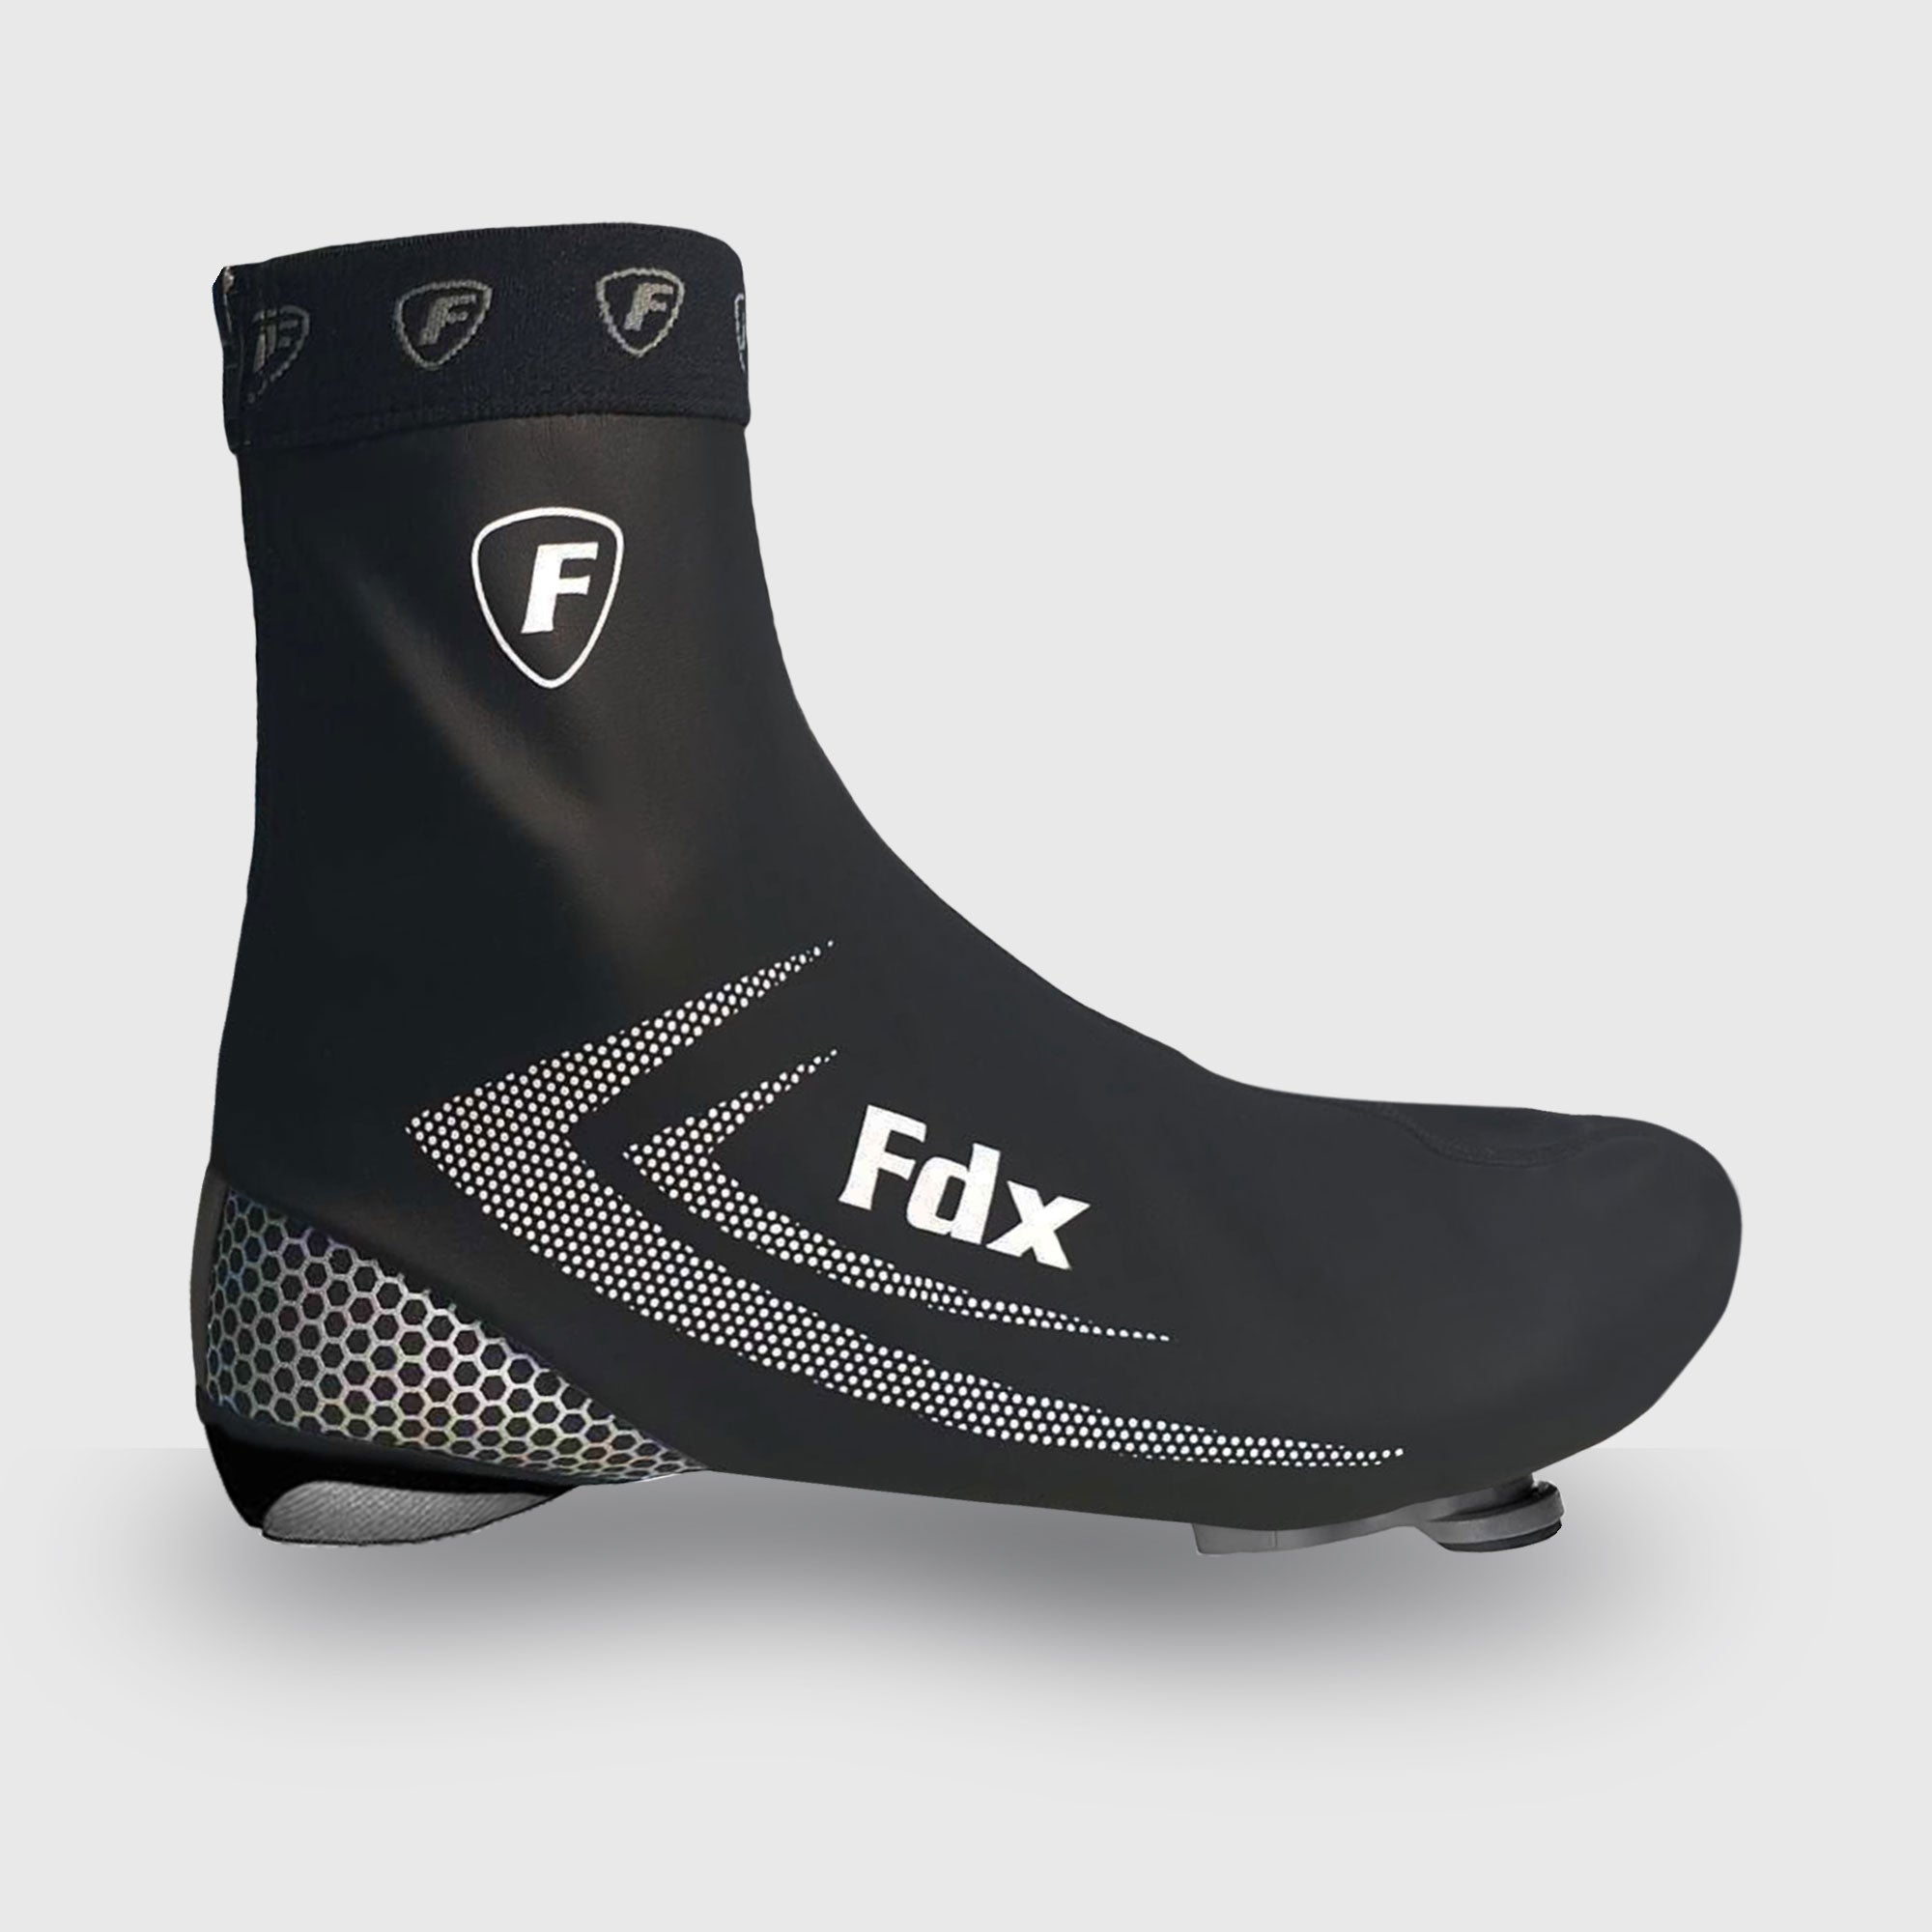 Fdx SC1 360° Reflective Black Cycling Shoe Covers